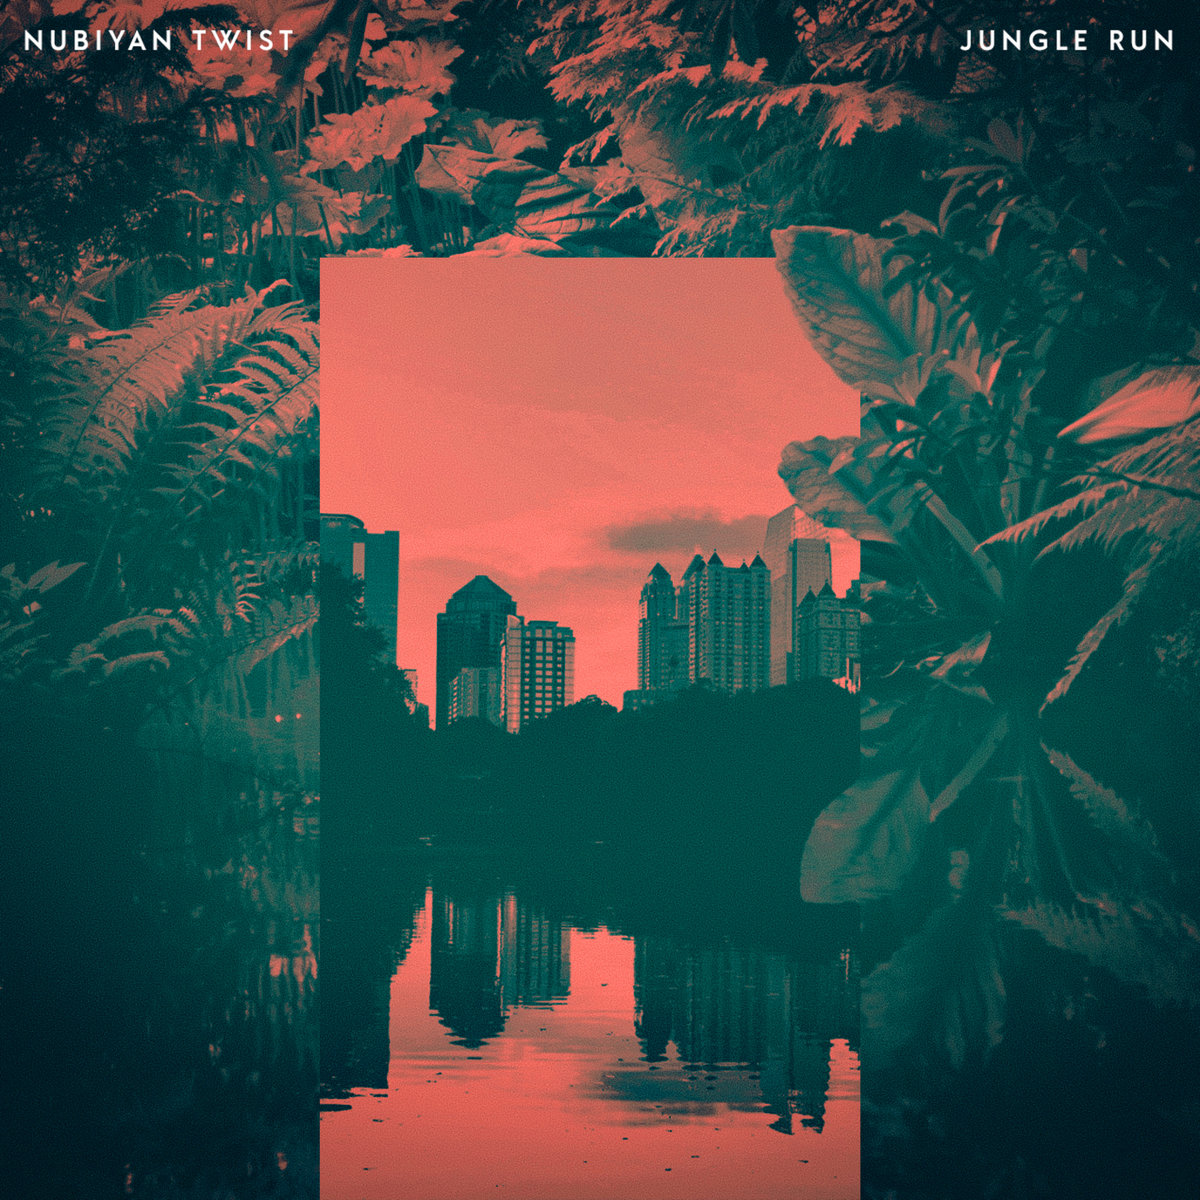 Cover artwork of Jungle Run by Nubiyan Twist